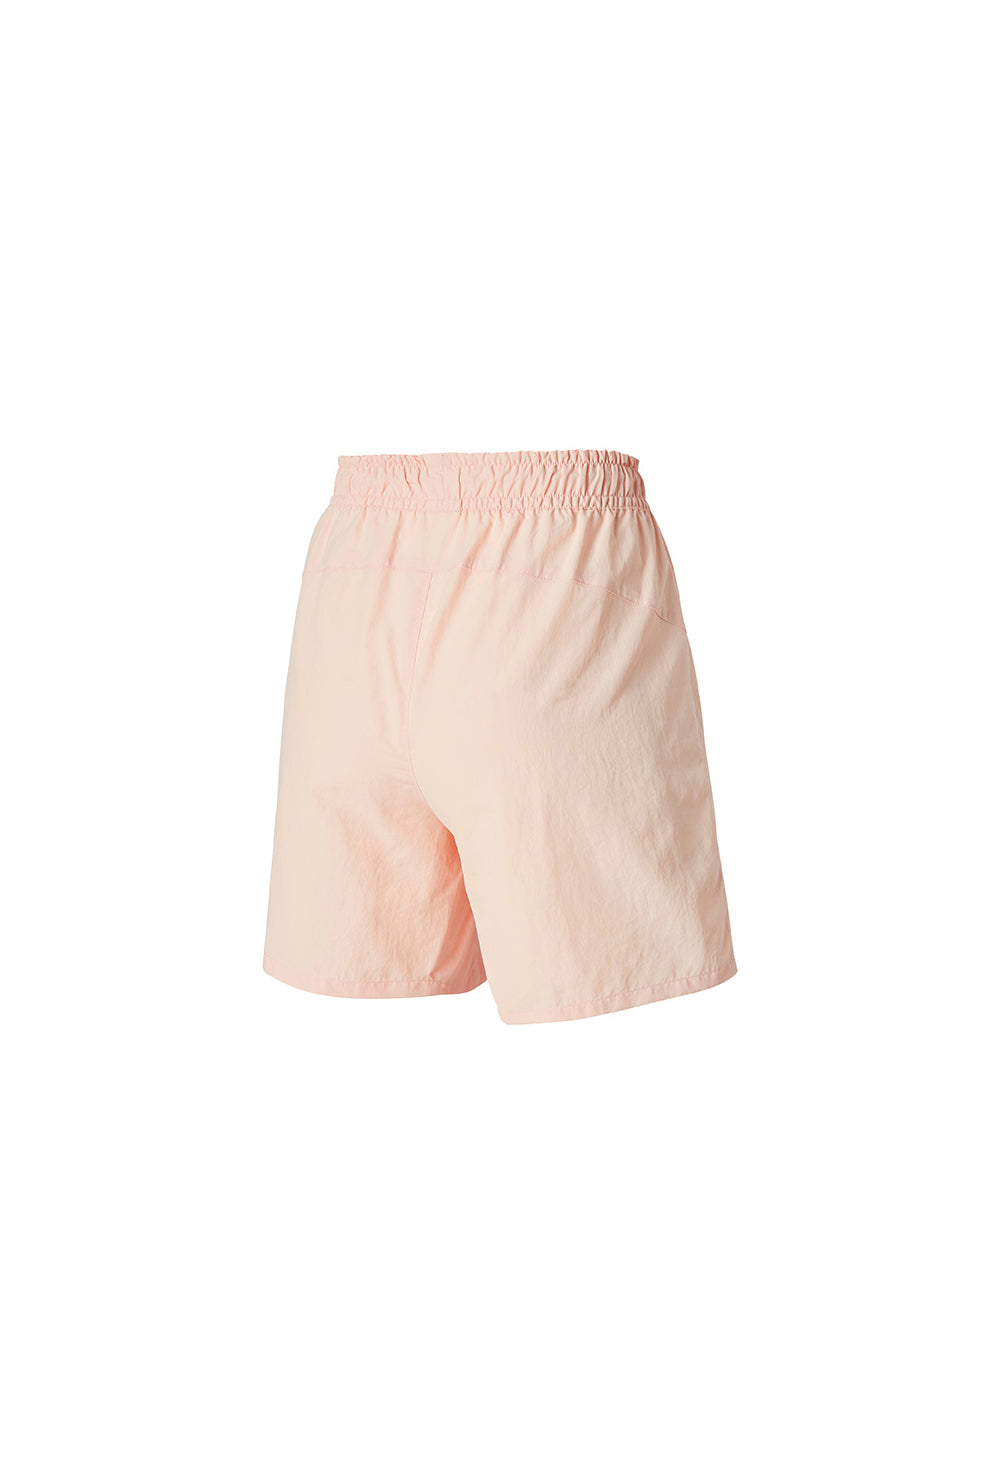 Basic Woven Half Shorts - Peach Peony (Clearance)